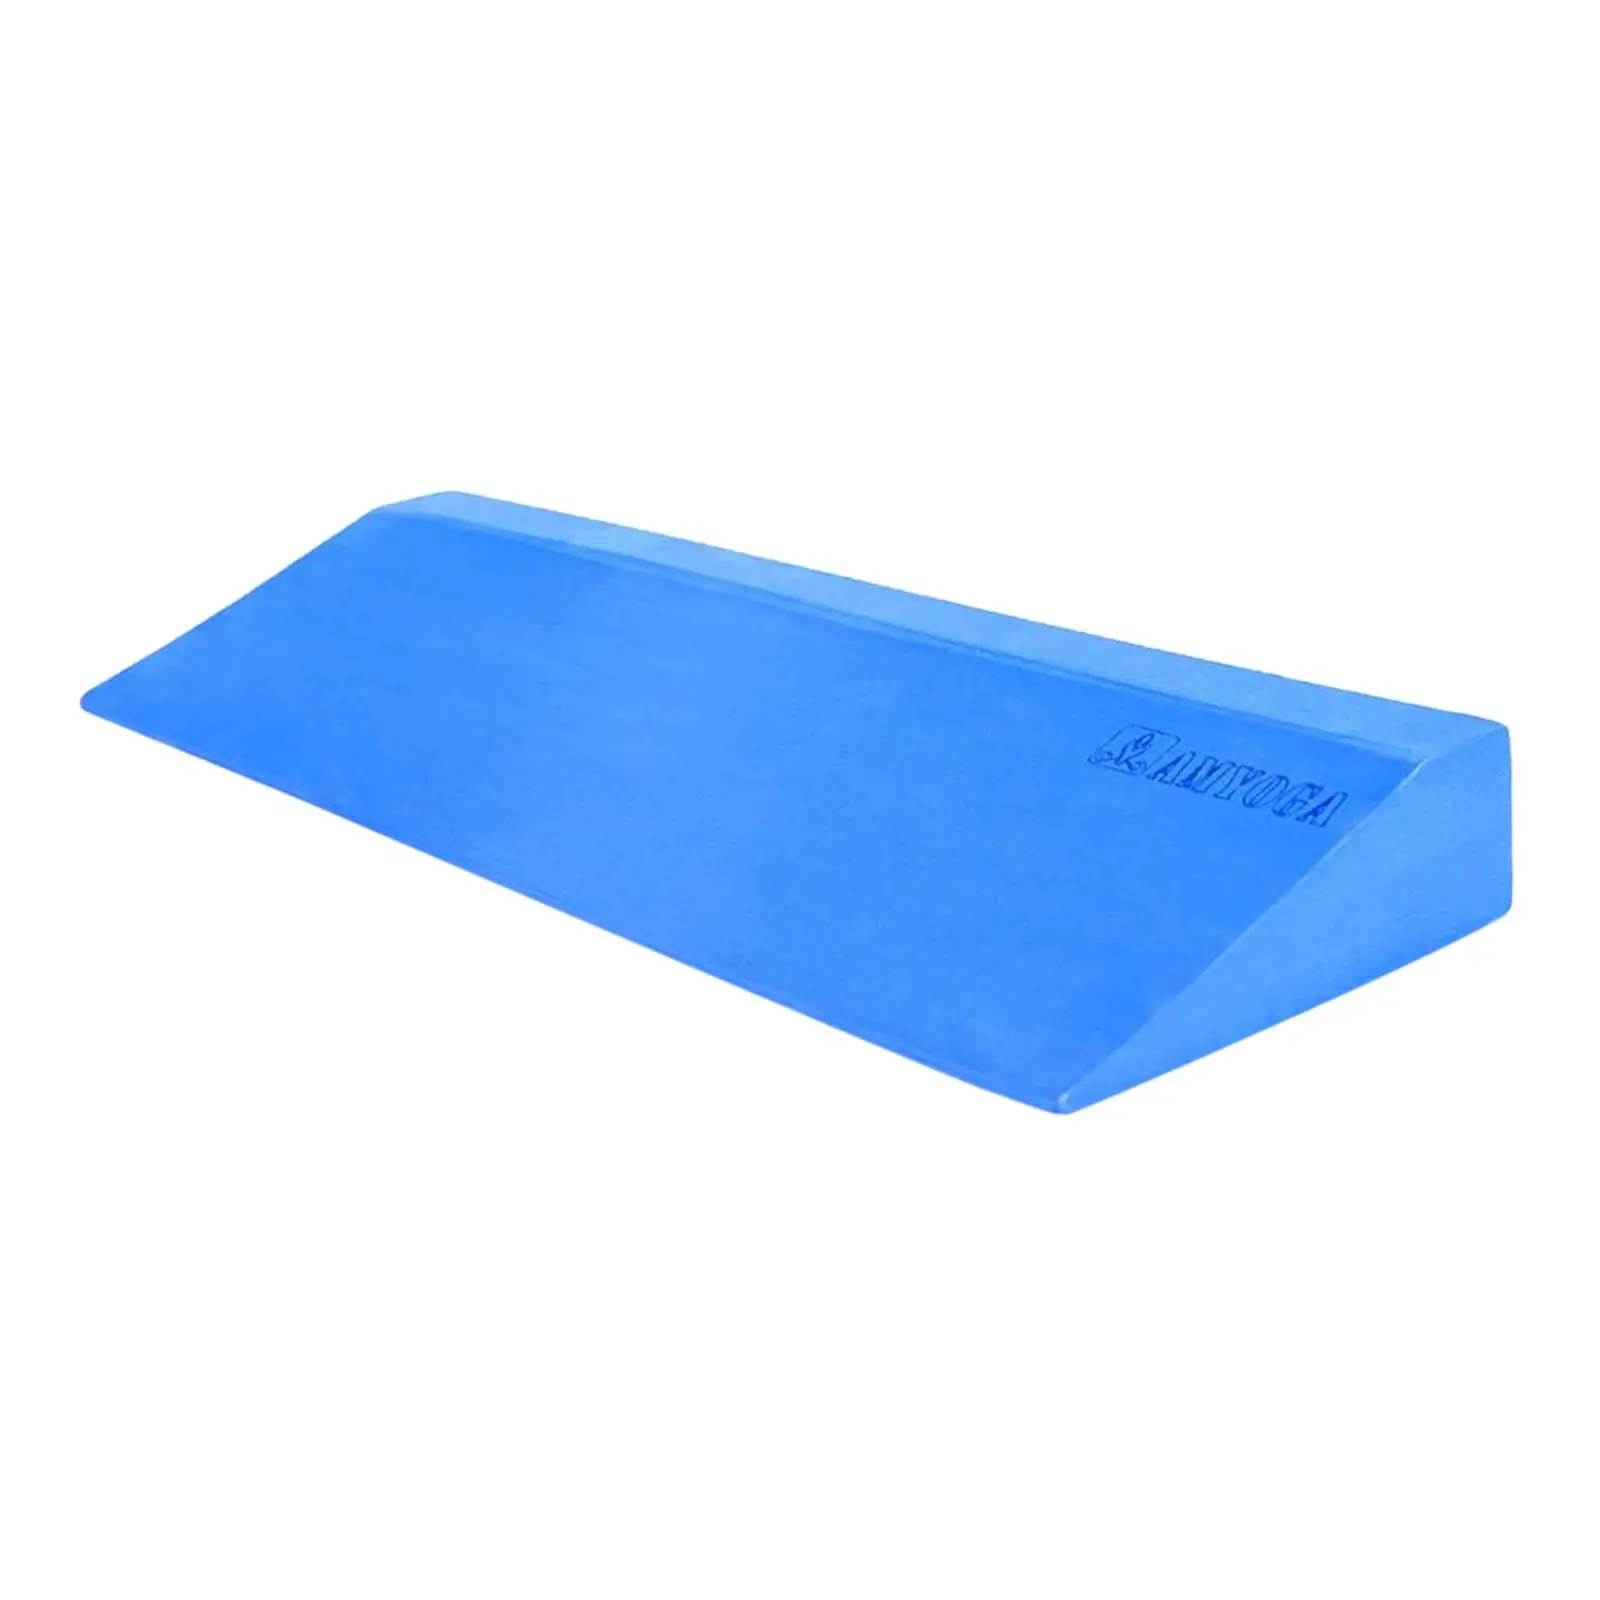 1 Piece Yoga Blocks Squat Wedge Balance Foam Inclined Plate for Calf Raise